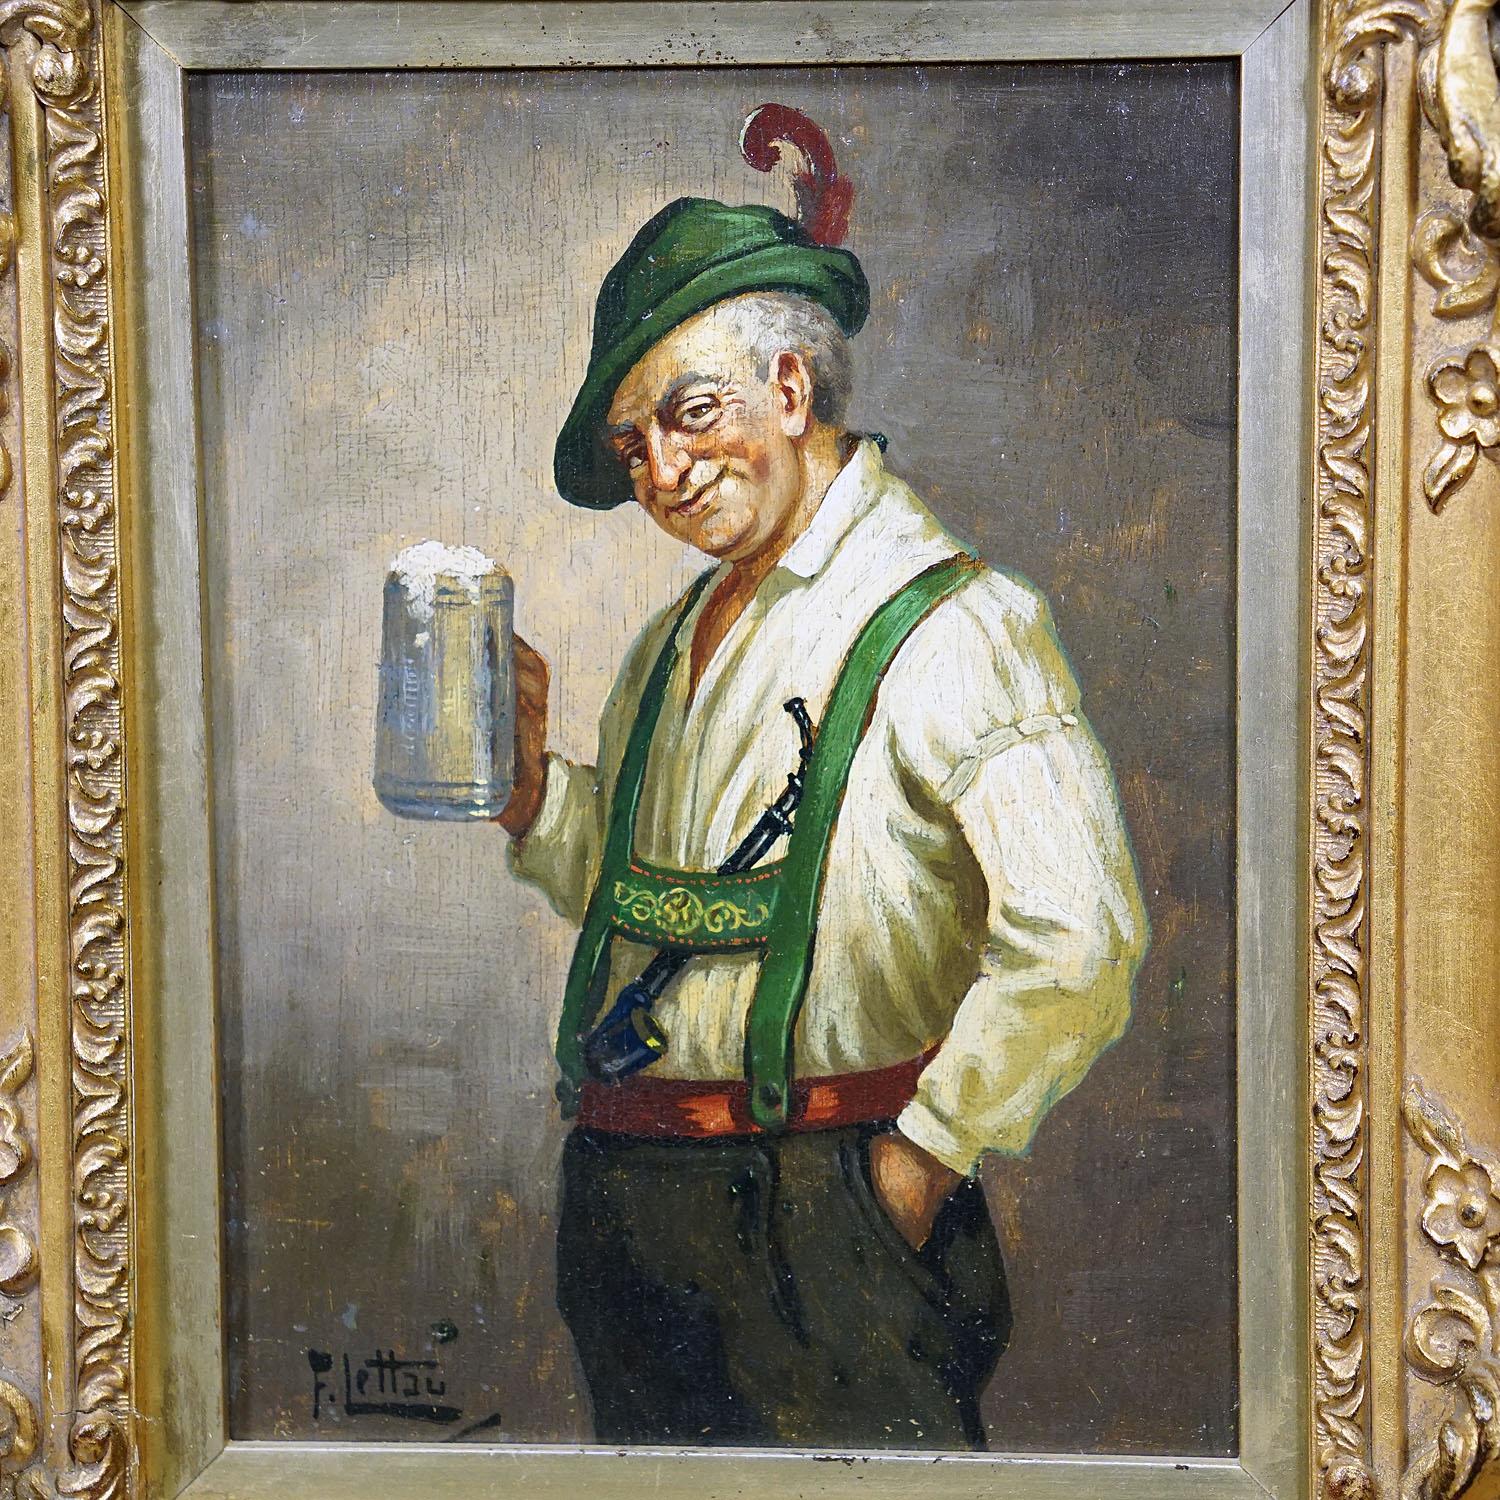 German Friedrich Lettau, Bavarian Folksy Man with Beer Mug, Oil on Wood Ca. 1950s